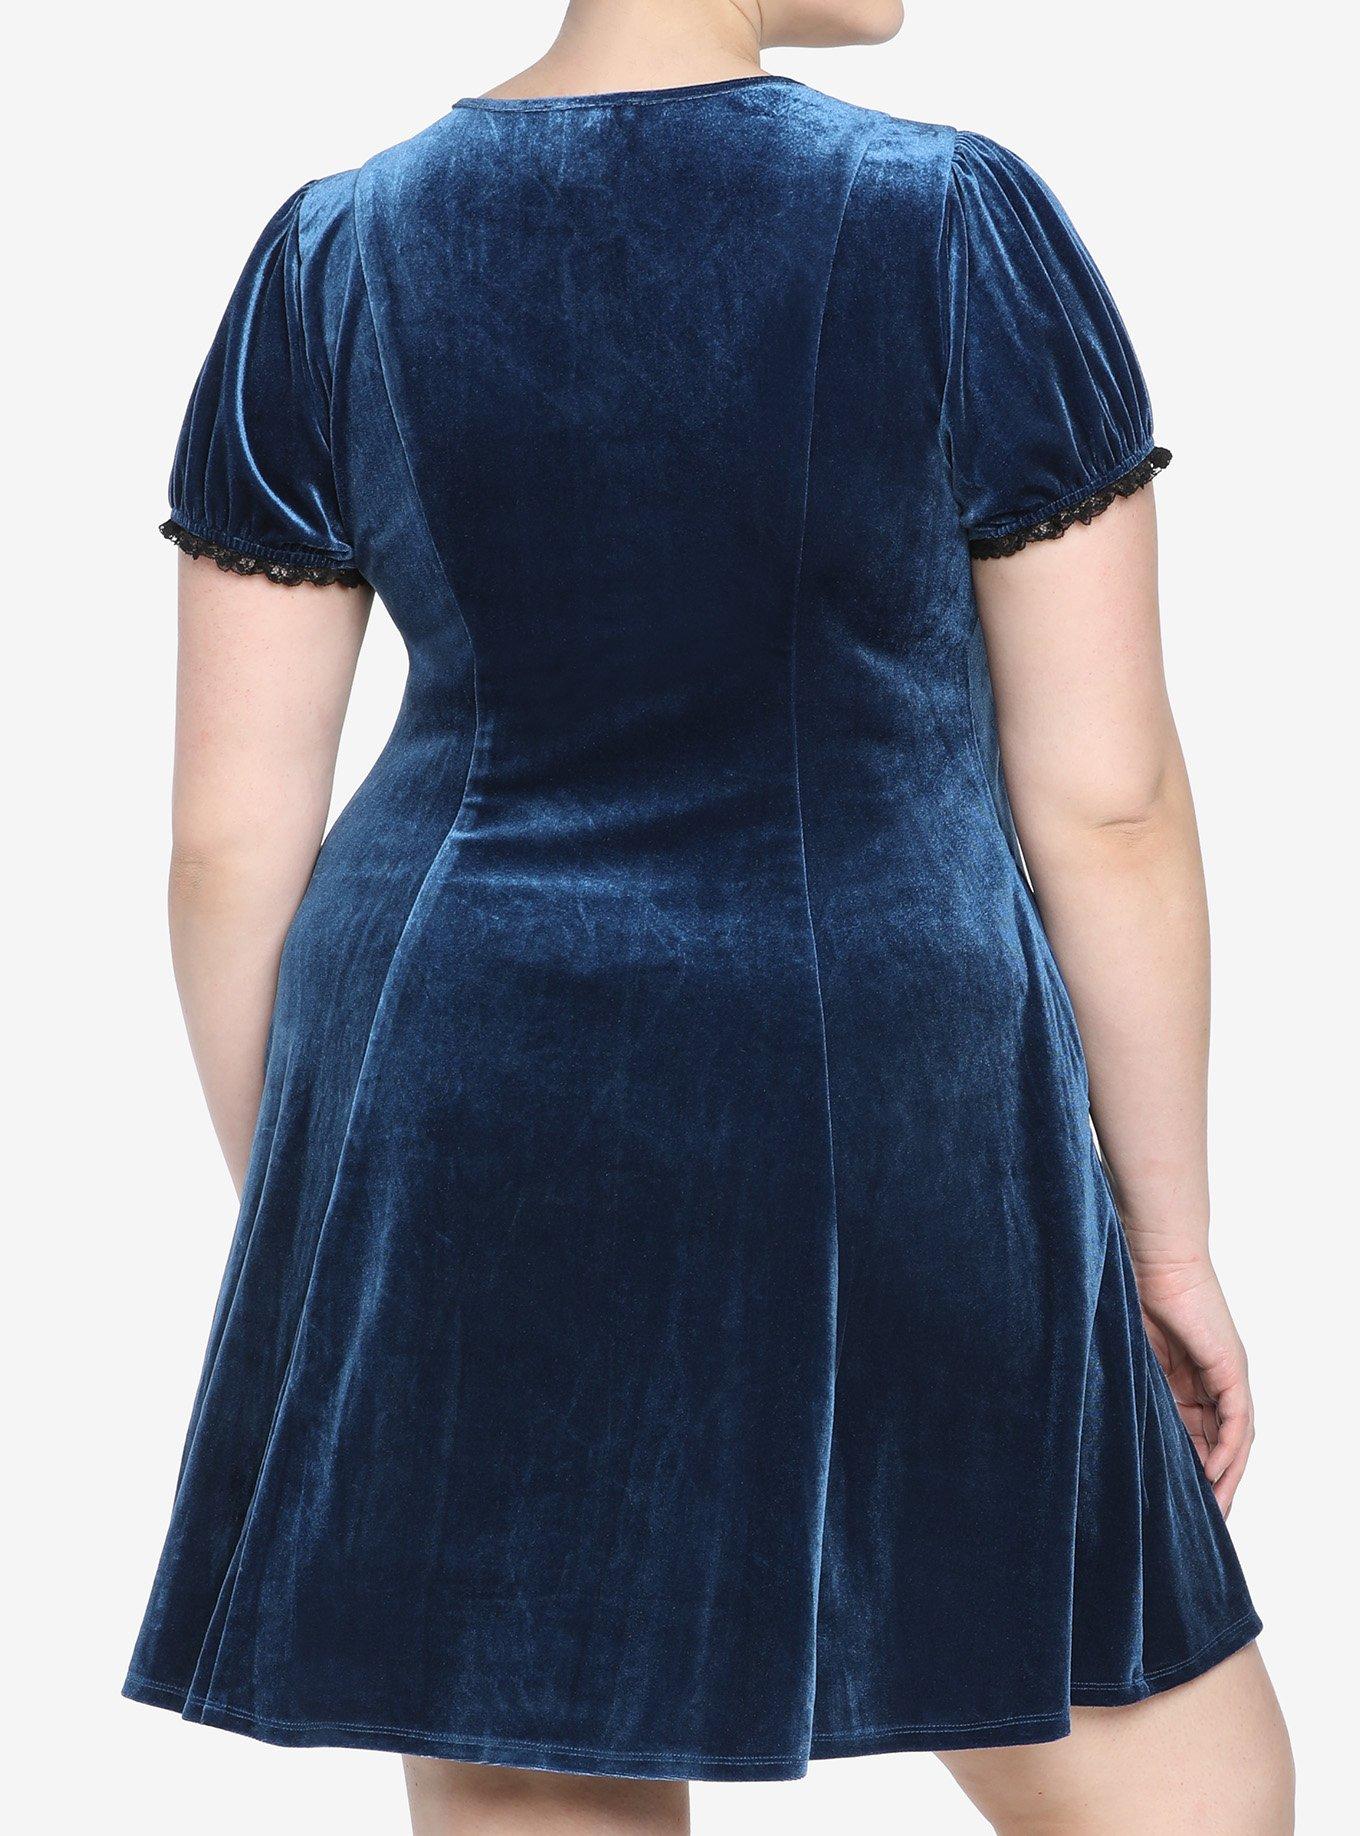 Blue Velvet & Lace Sweetheart Dress Plus Size, BLUE, alternate